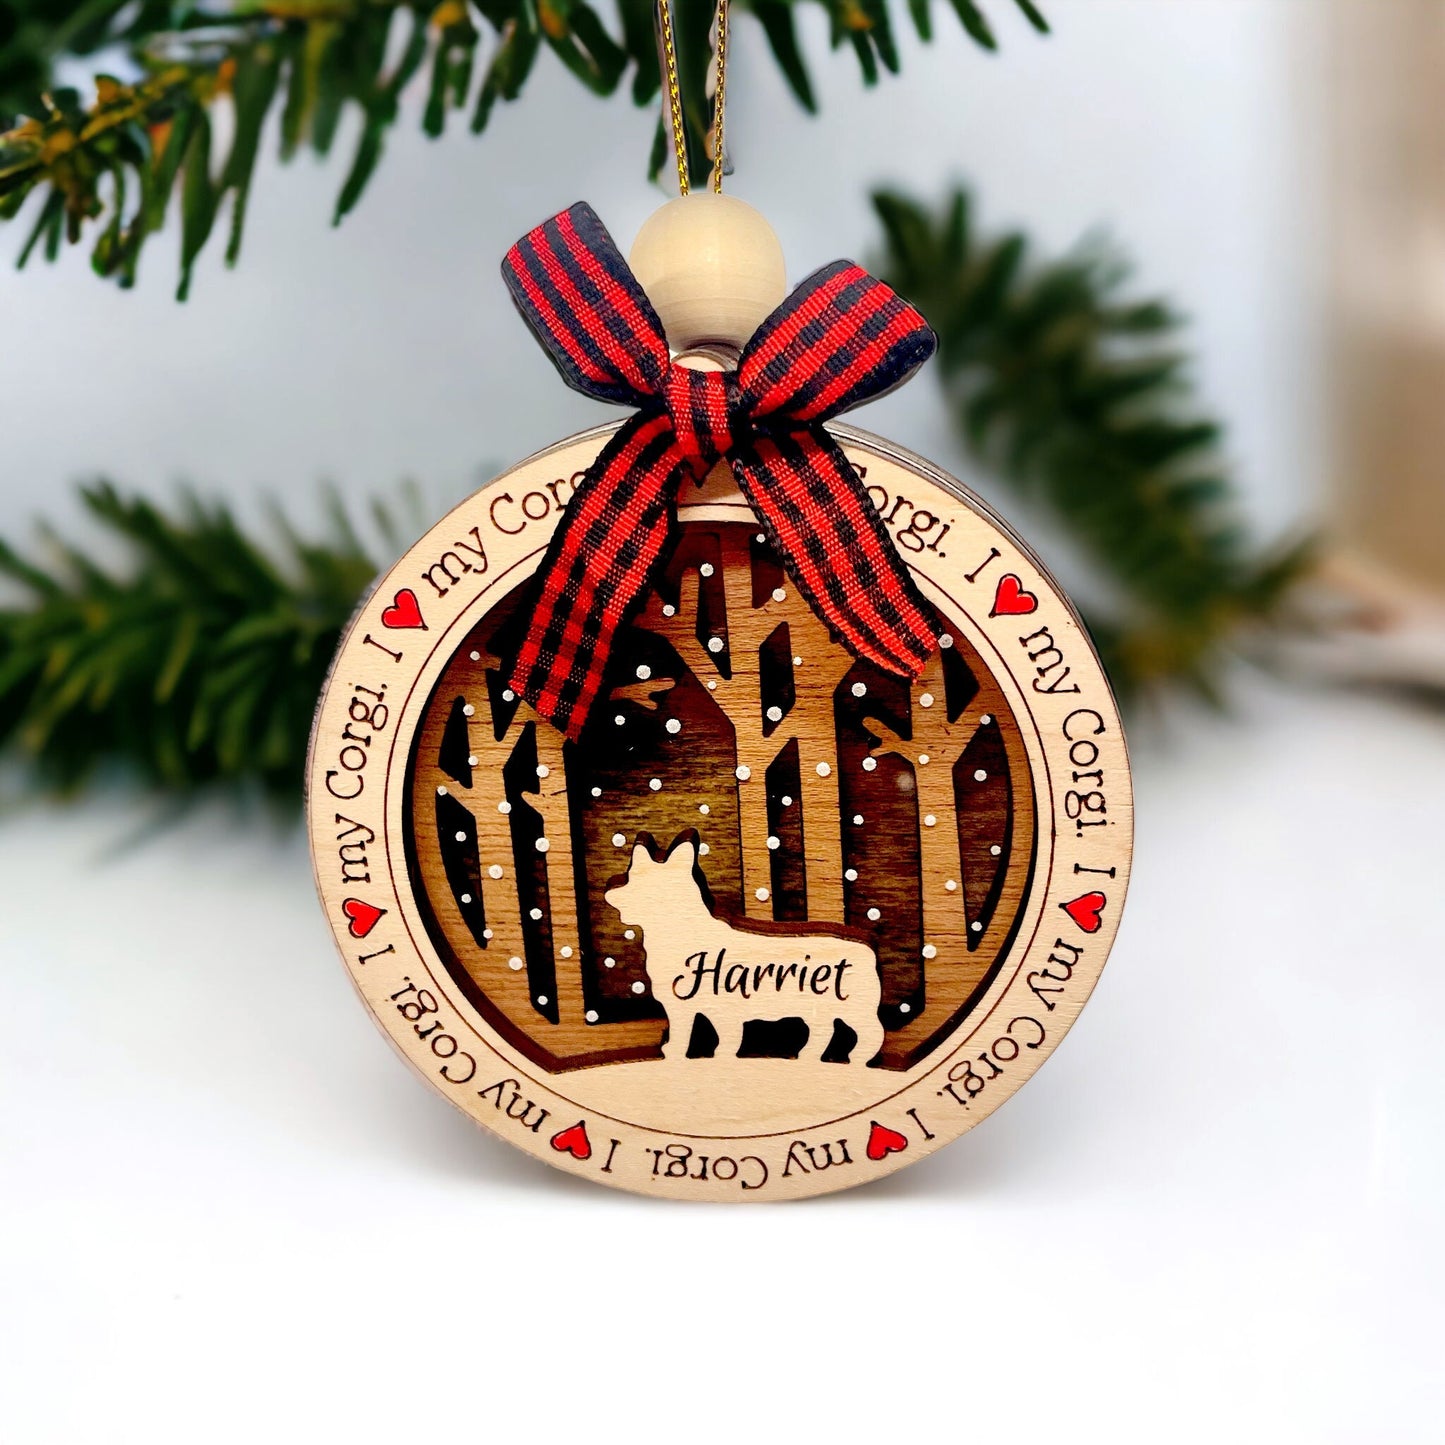 I Love My Pet Ornament | Pet Christmas Ornament | Rescue Dog Ornament